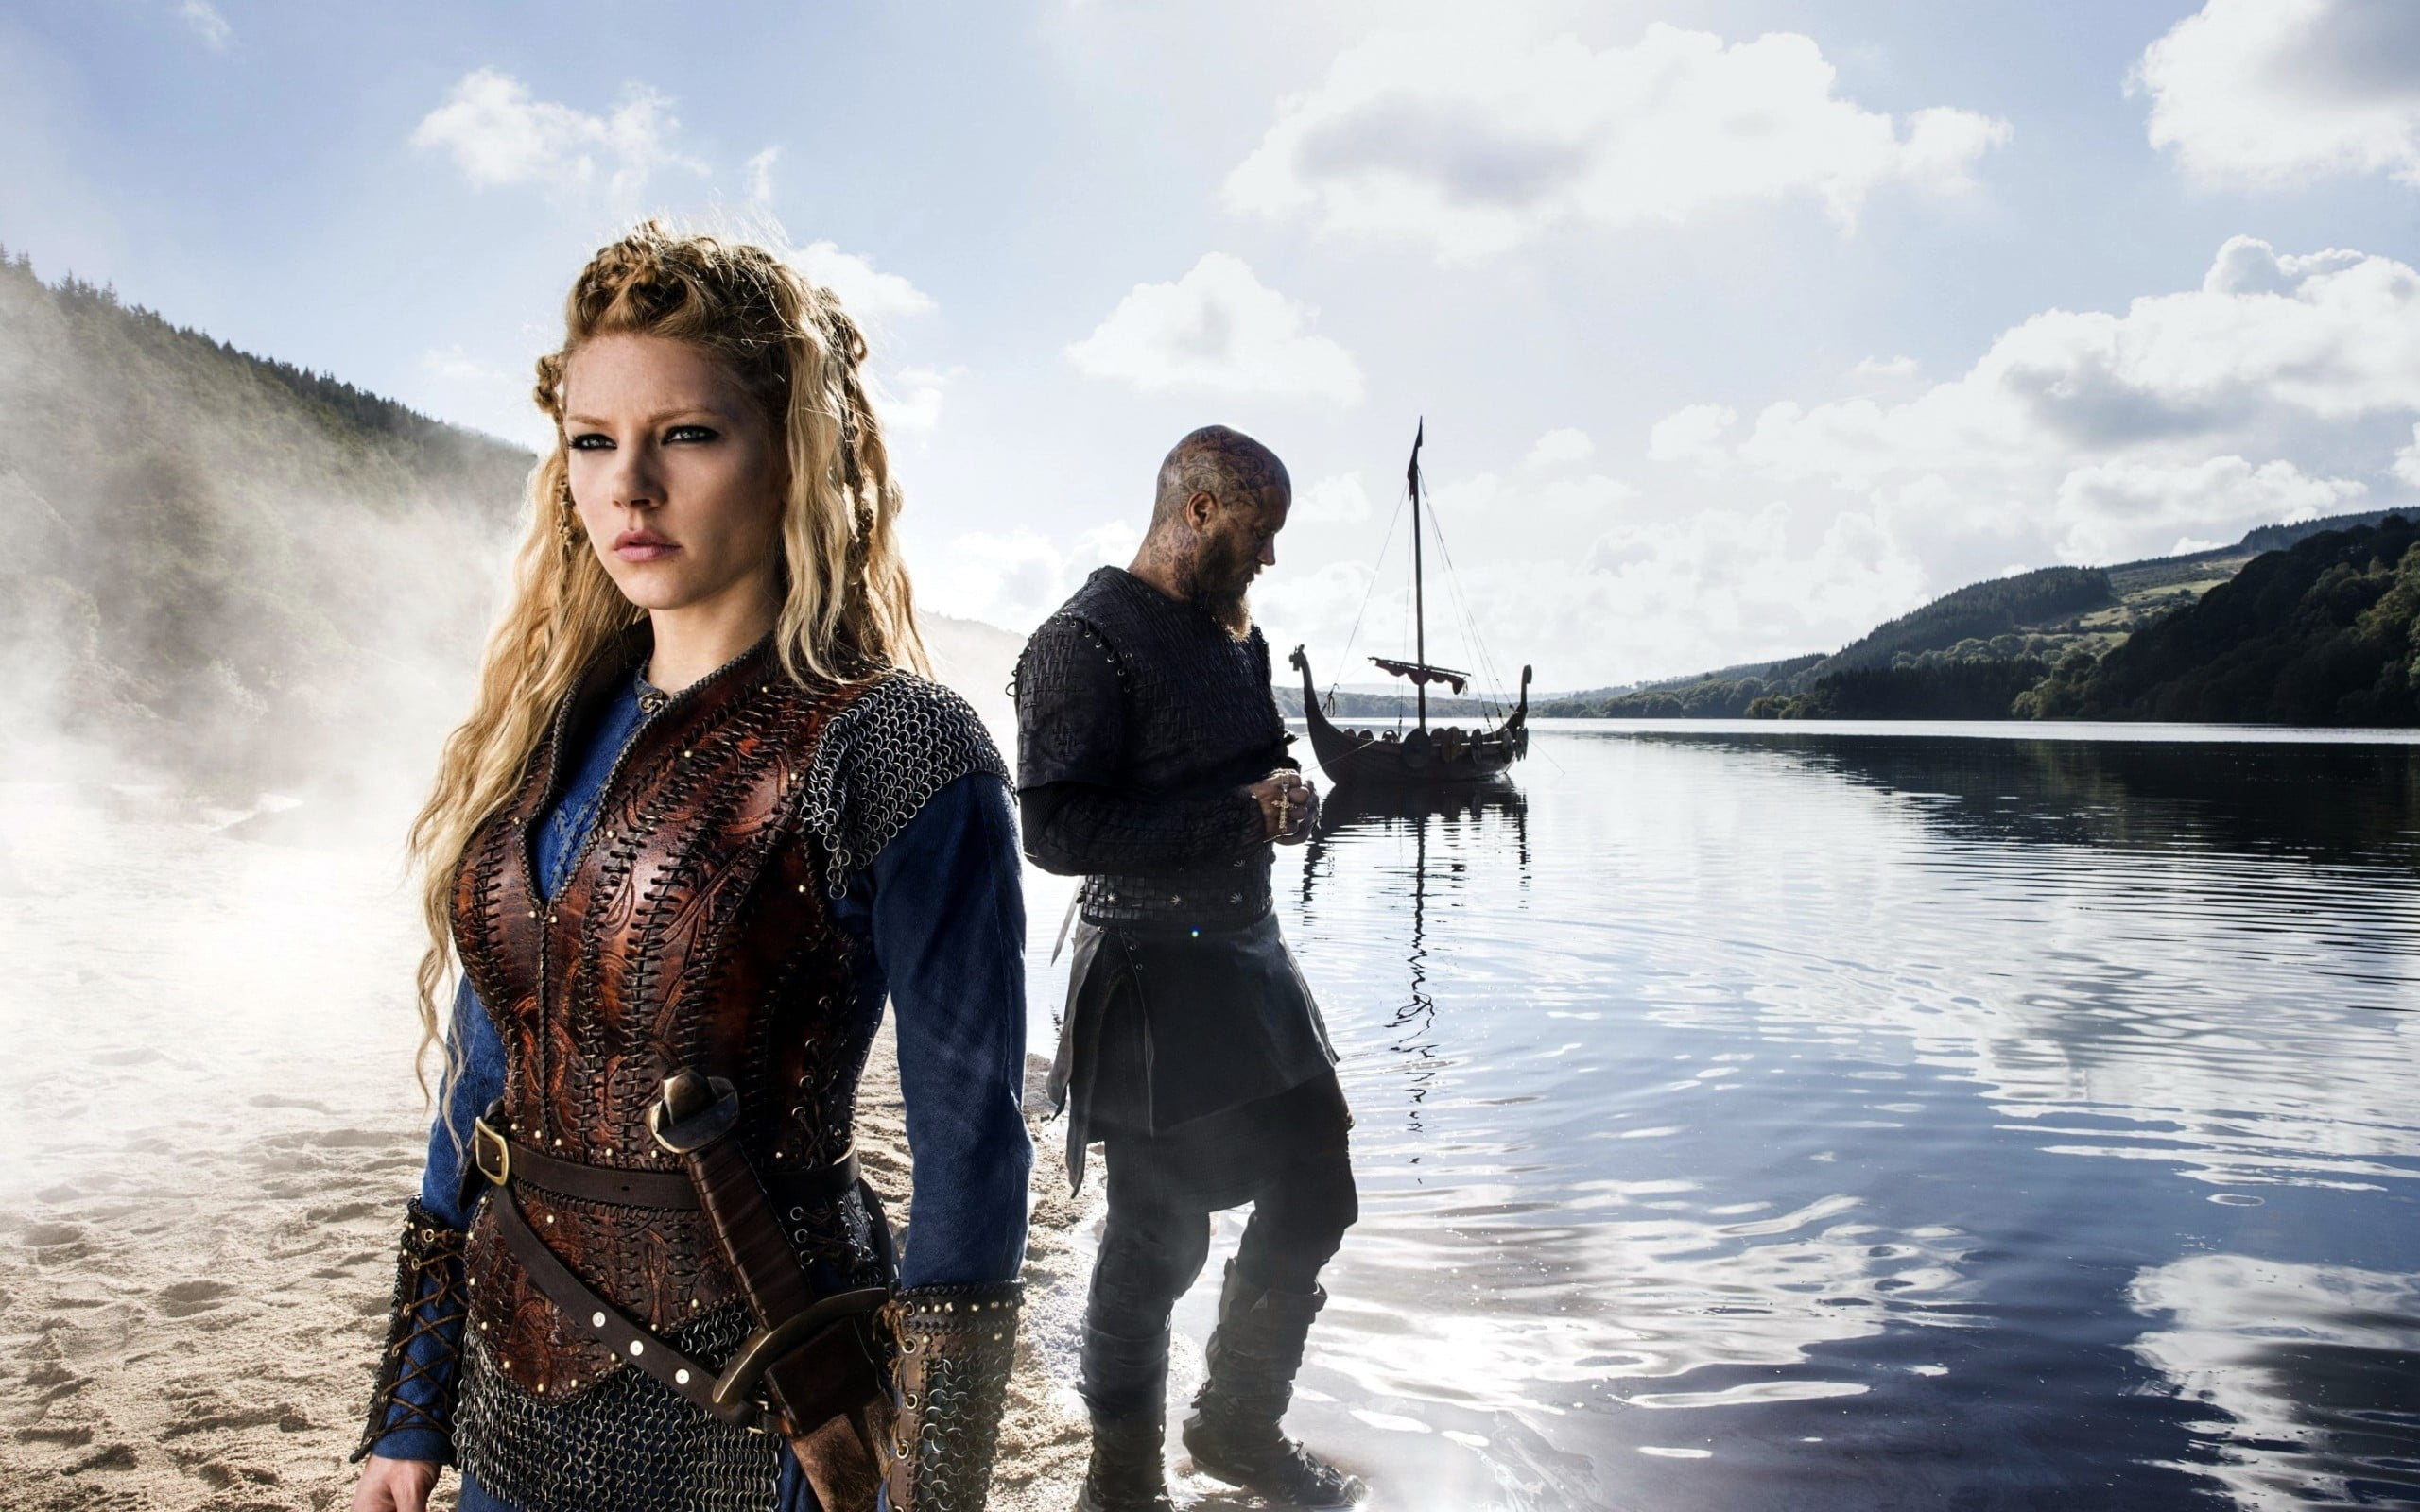 Vikings (TV series), Lagertha Lothbrok, Katheryn Winnick, women